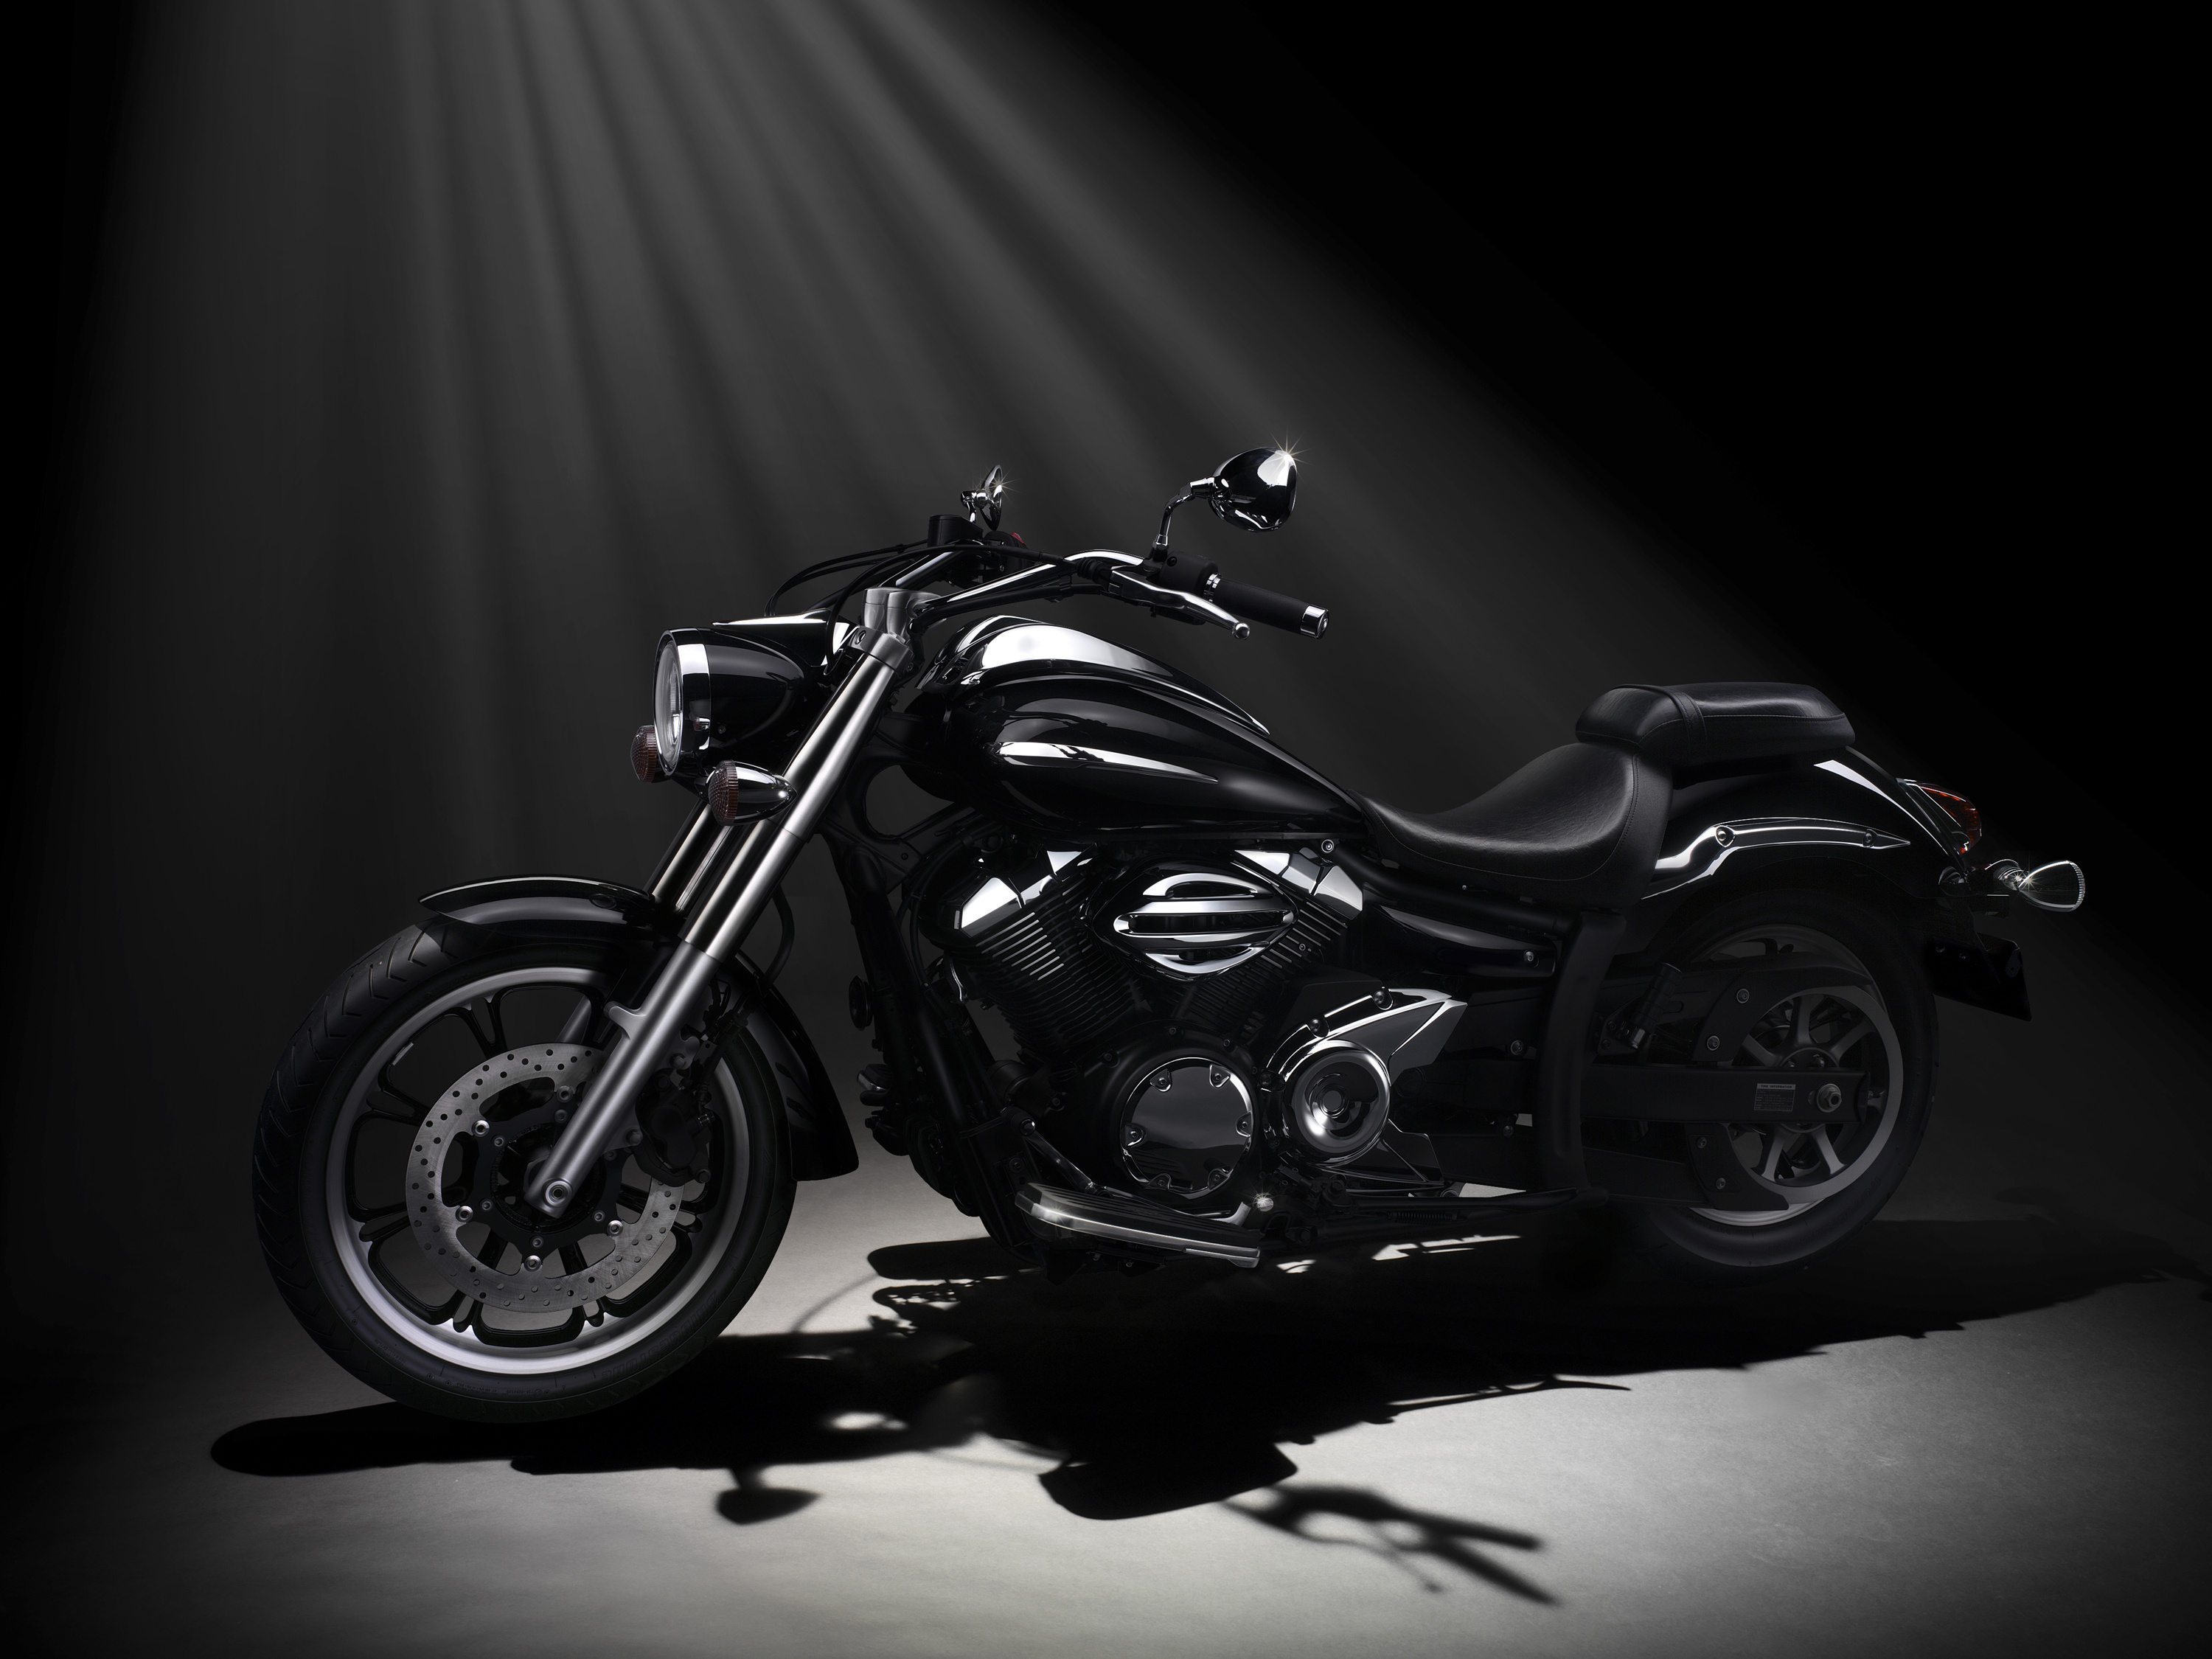 69096 descargar imagen yamaha, motocicletas, motocicleta, xvs950a, estrella de medianoche: fondos de pantalla y protectores de pantalla gratis